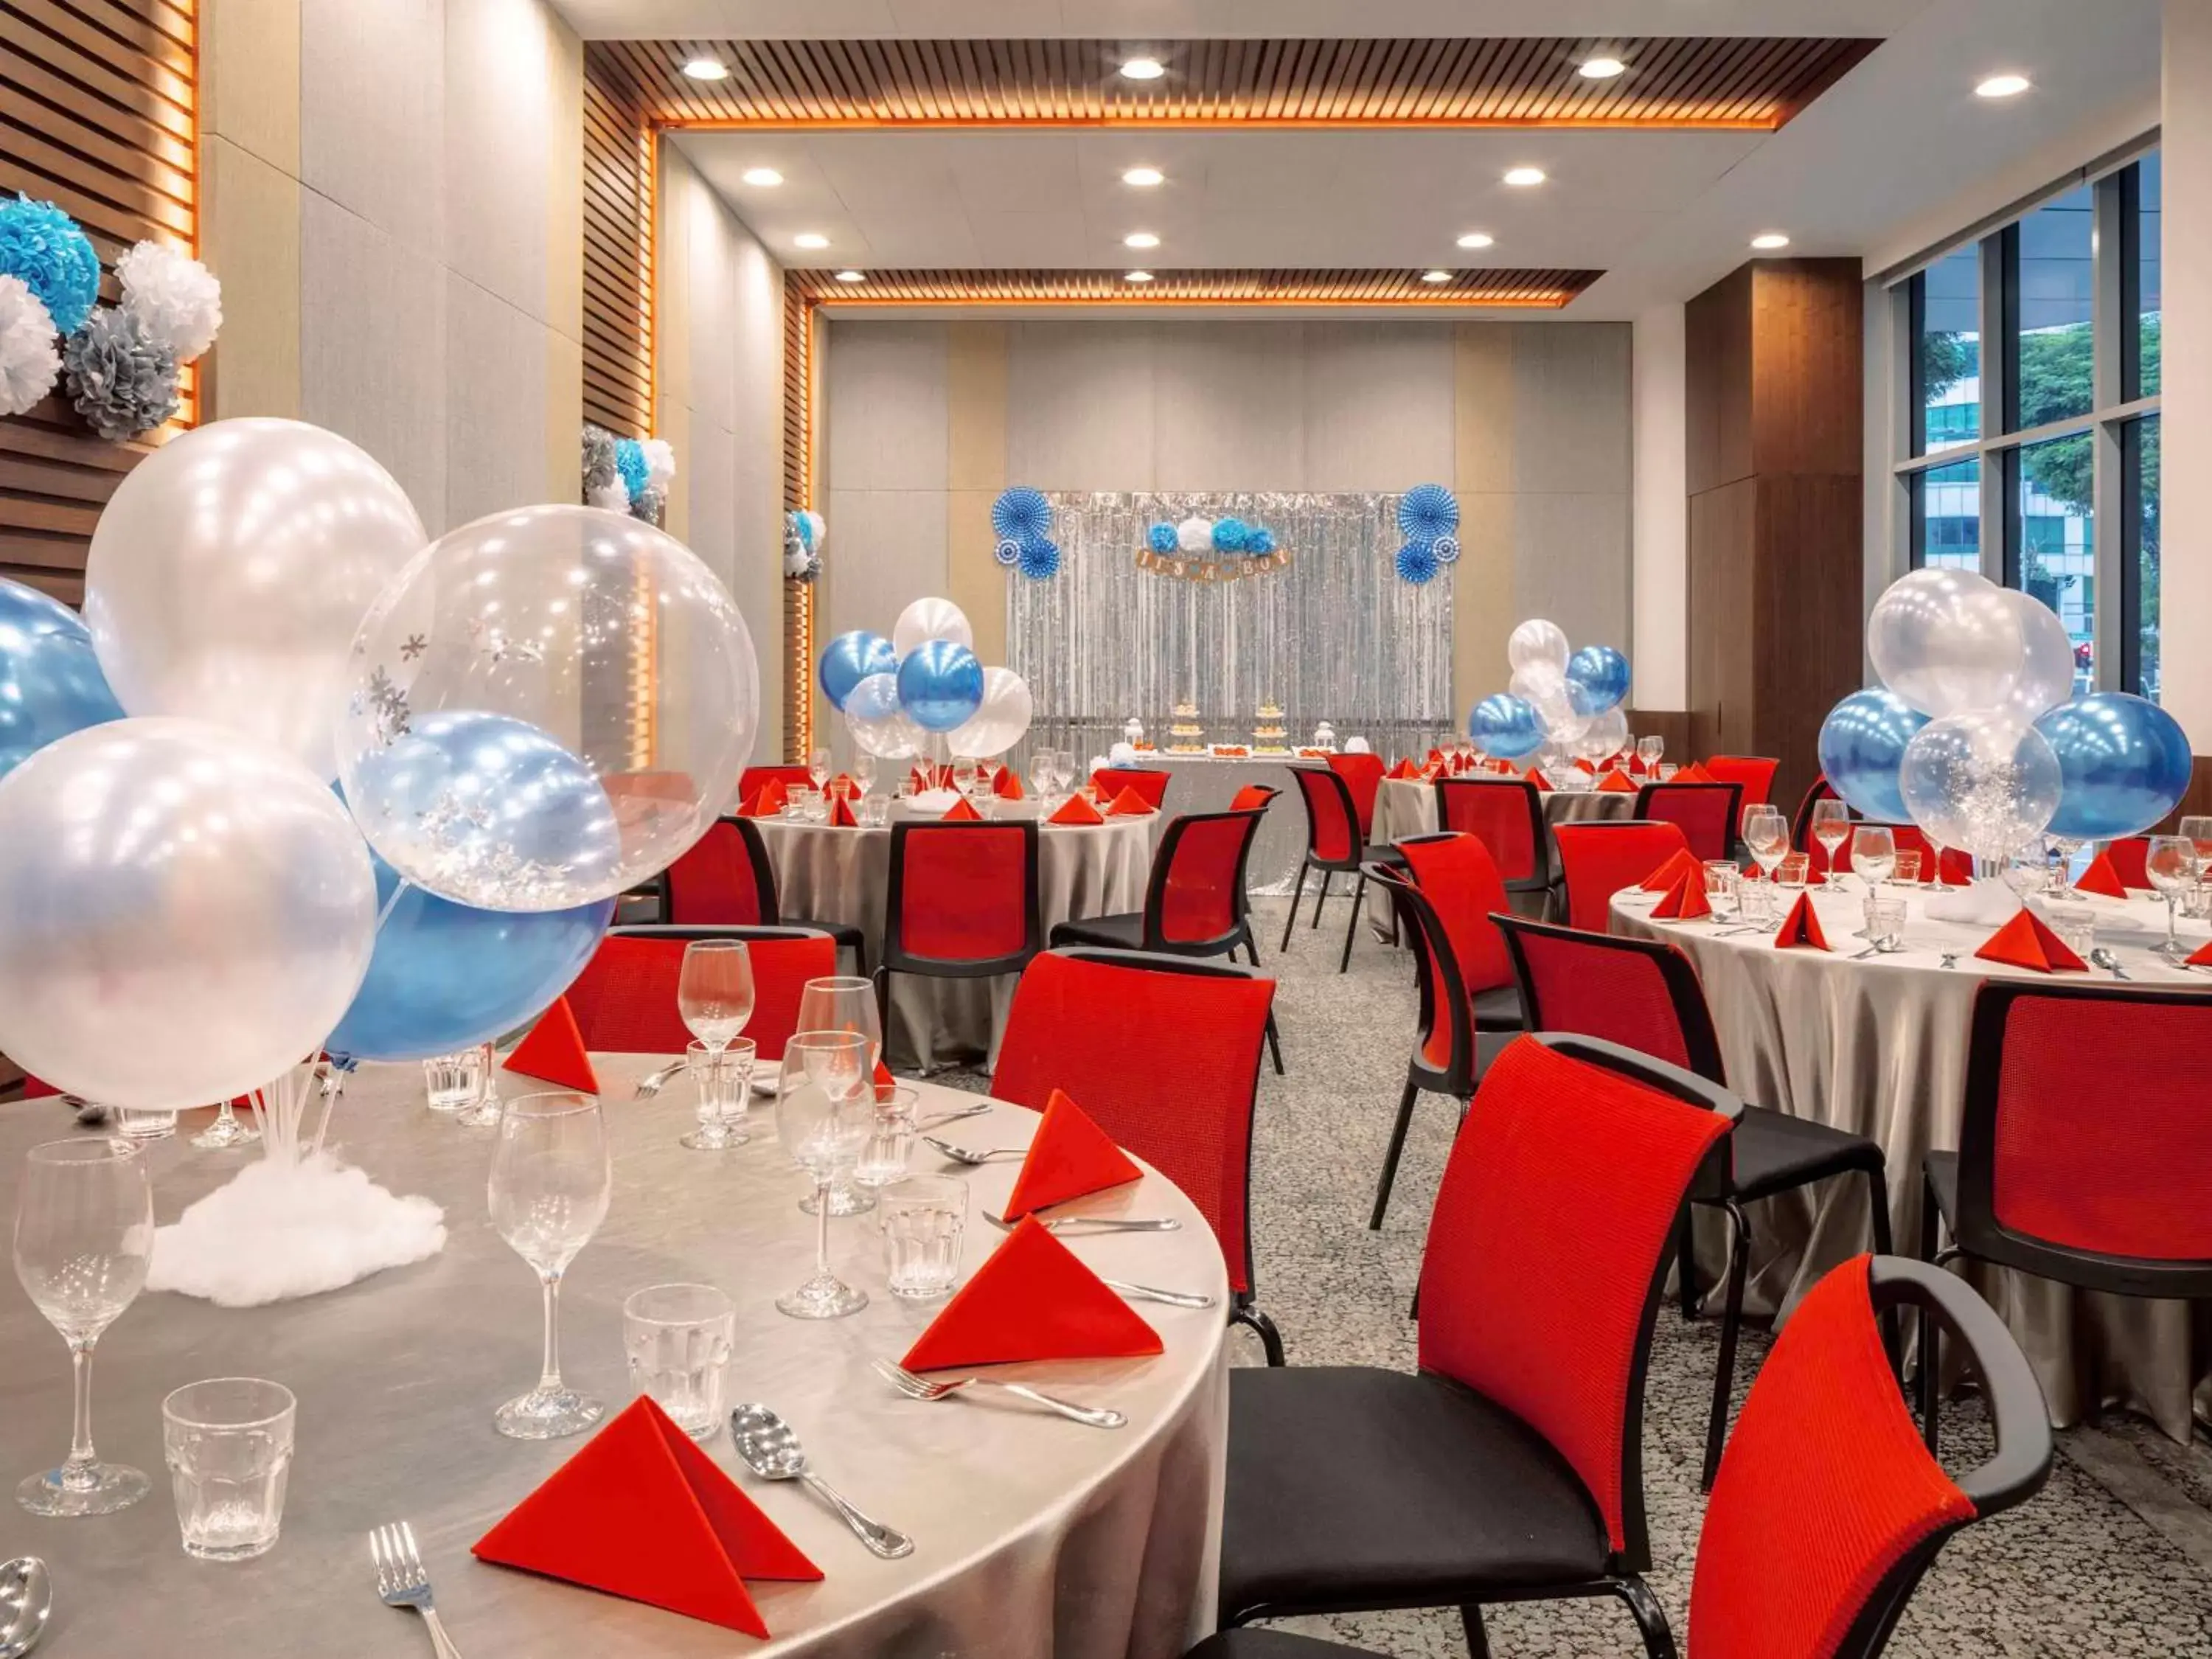 Meeting/conference room, Banquet Facilities in Ibis Singapore on Bencoolen